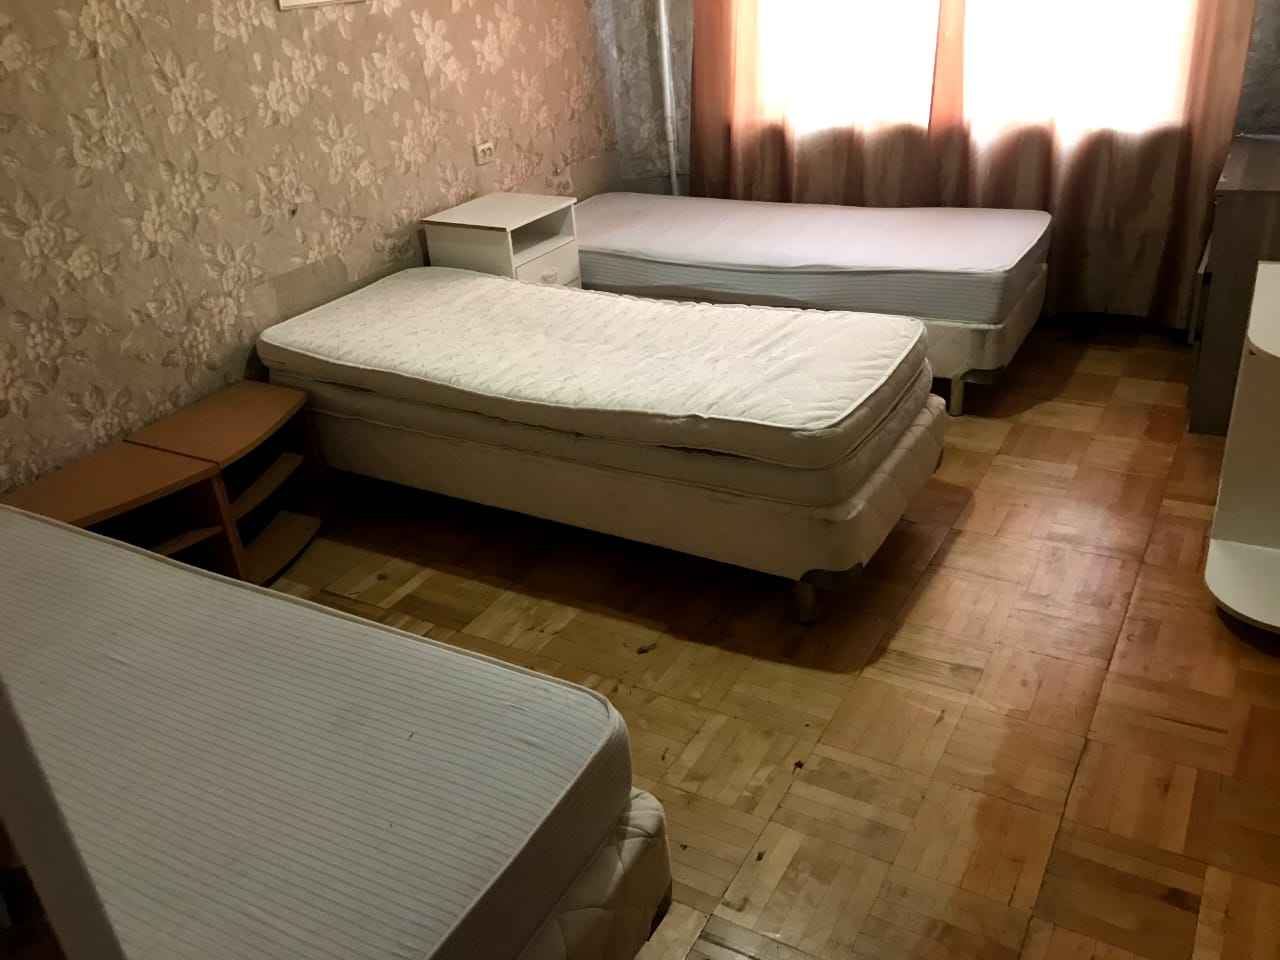 Двухкомнатная квартира на улице Машинцева в Химках. Кровати